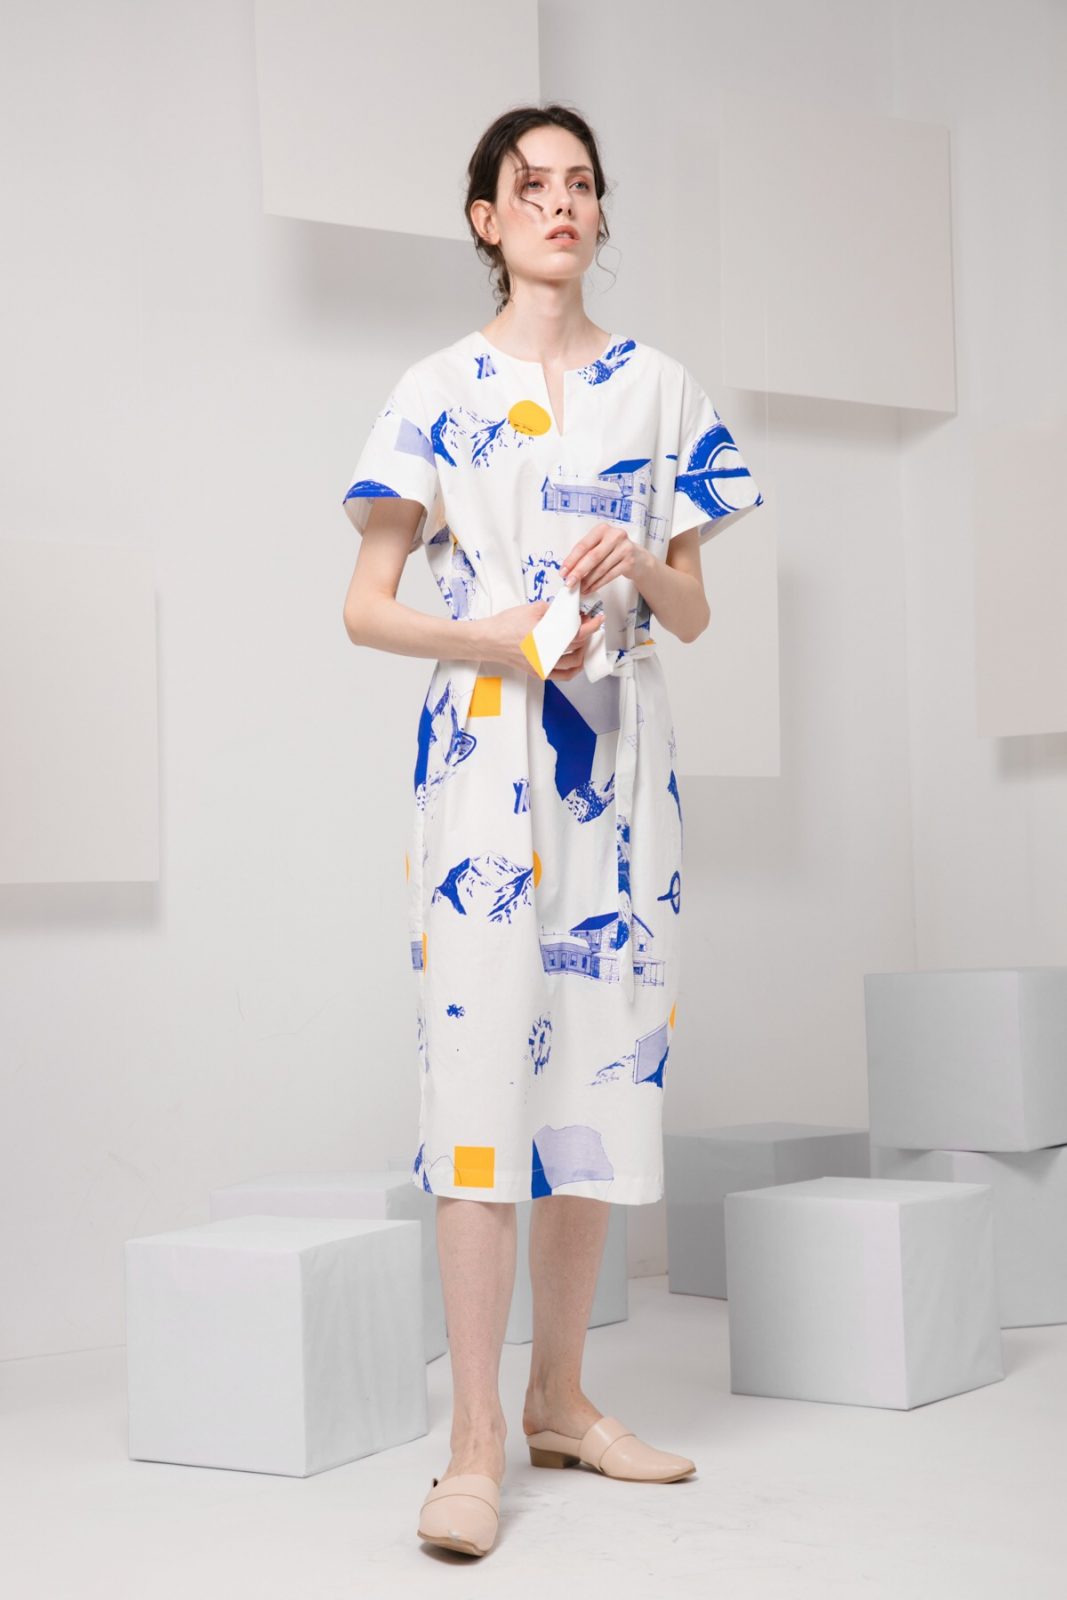 SKYE modern minimalist women clothing fashion Lois Dress interstellar